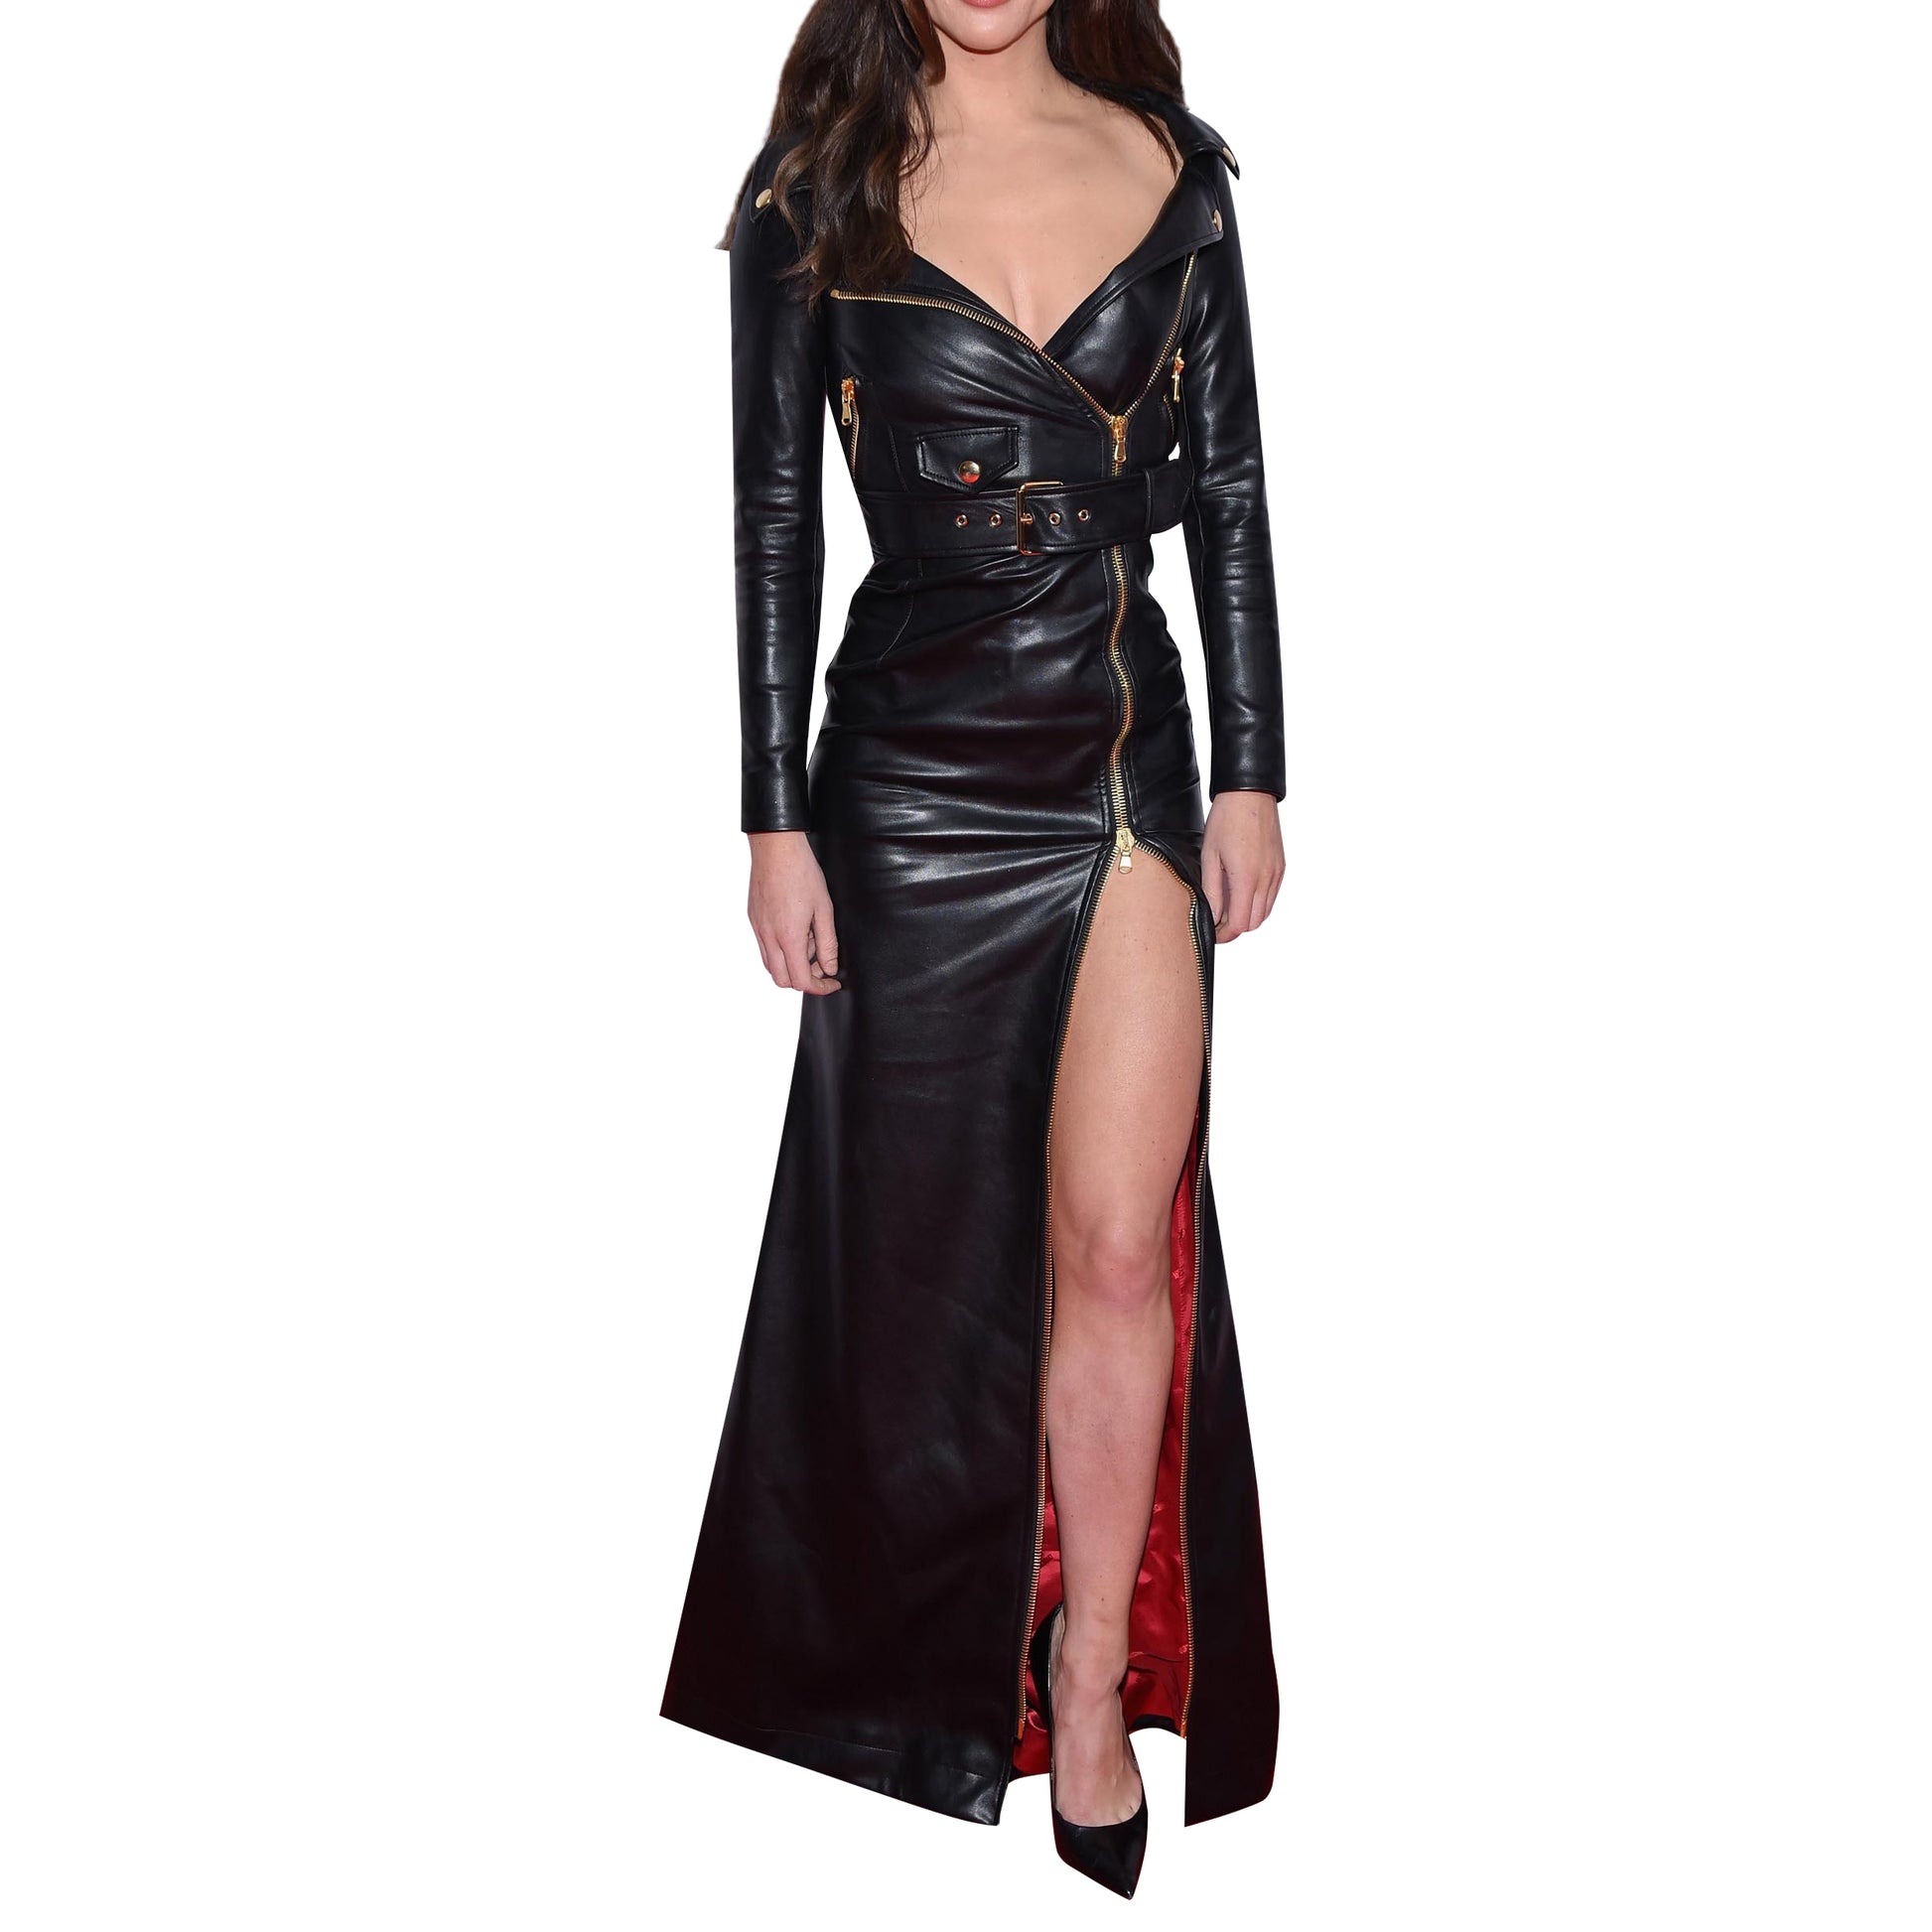 Genuine Leather Celebrity Jacqueline Macinnes Black Dress - Luxurena Leather